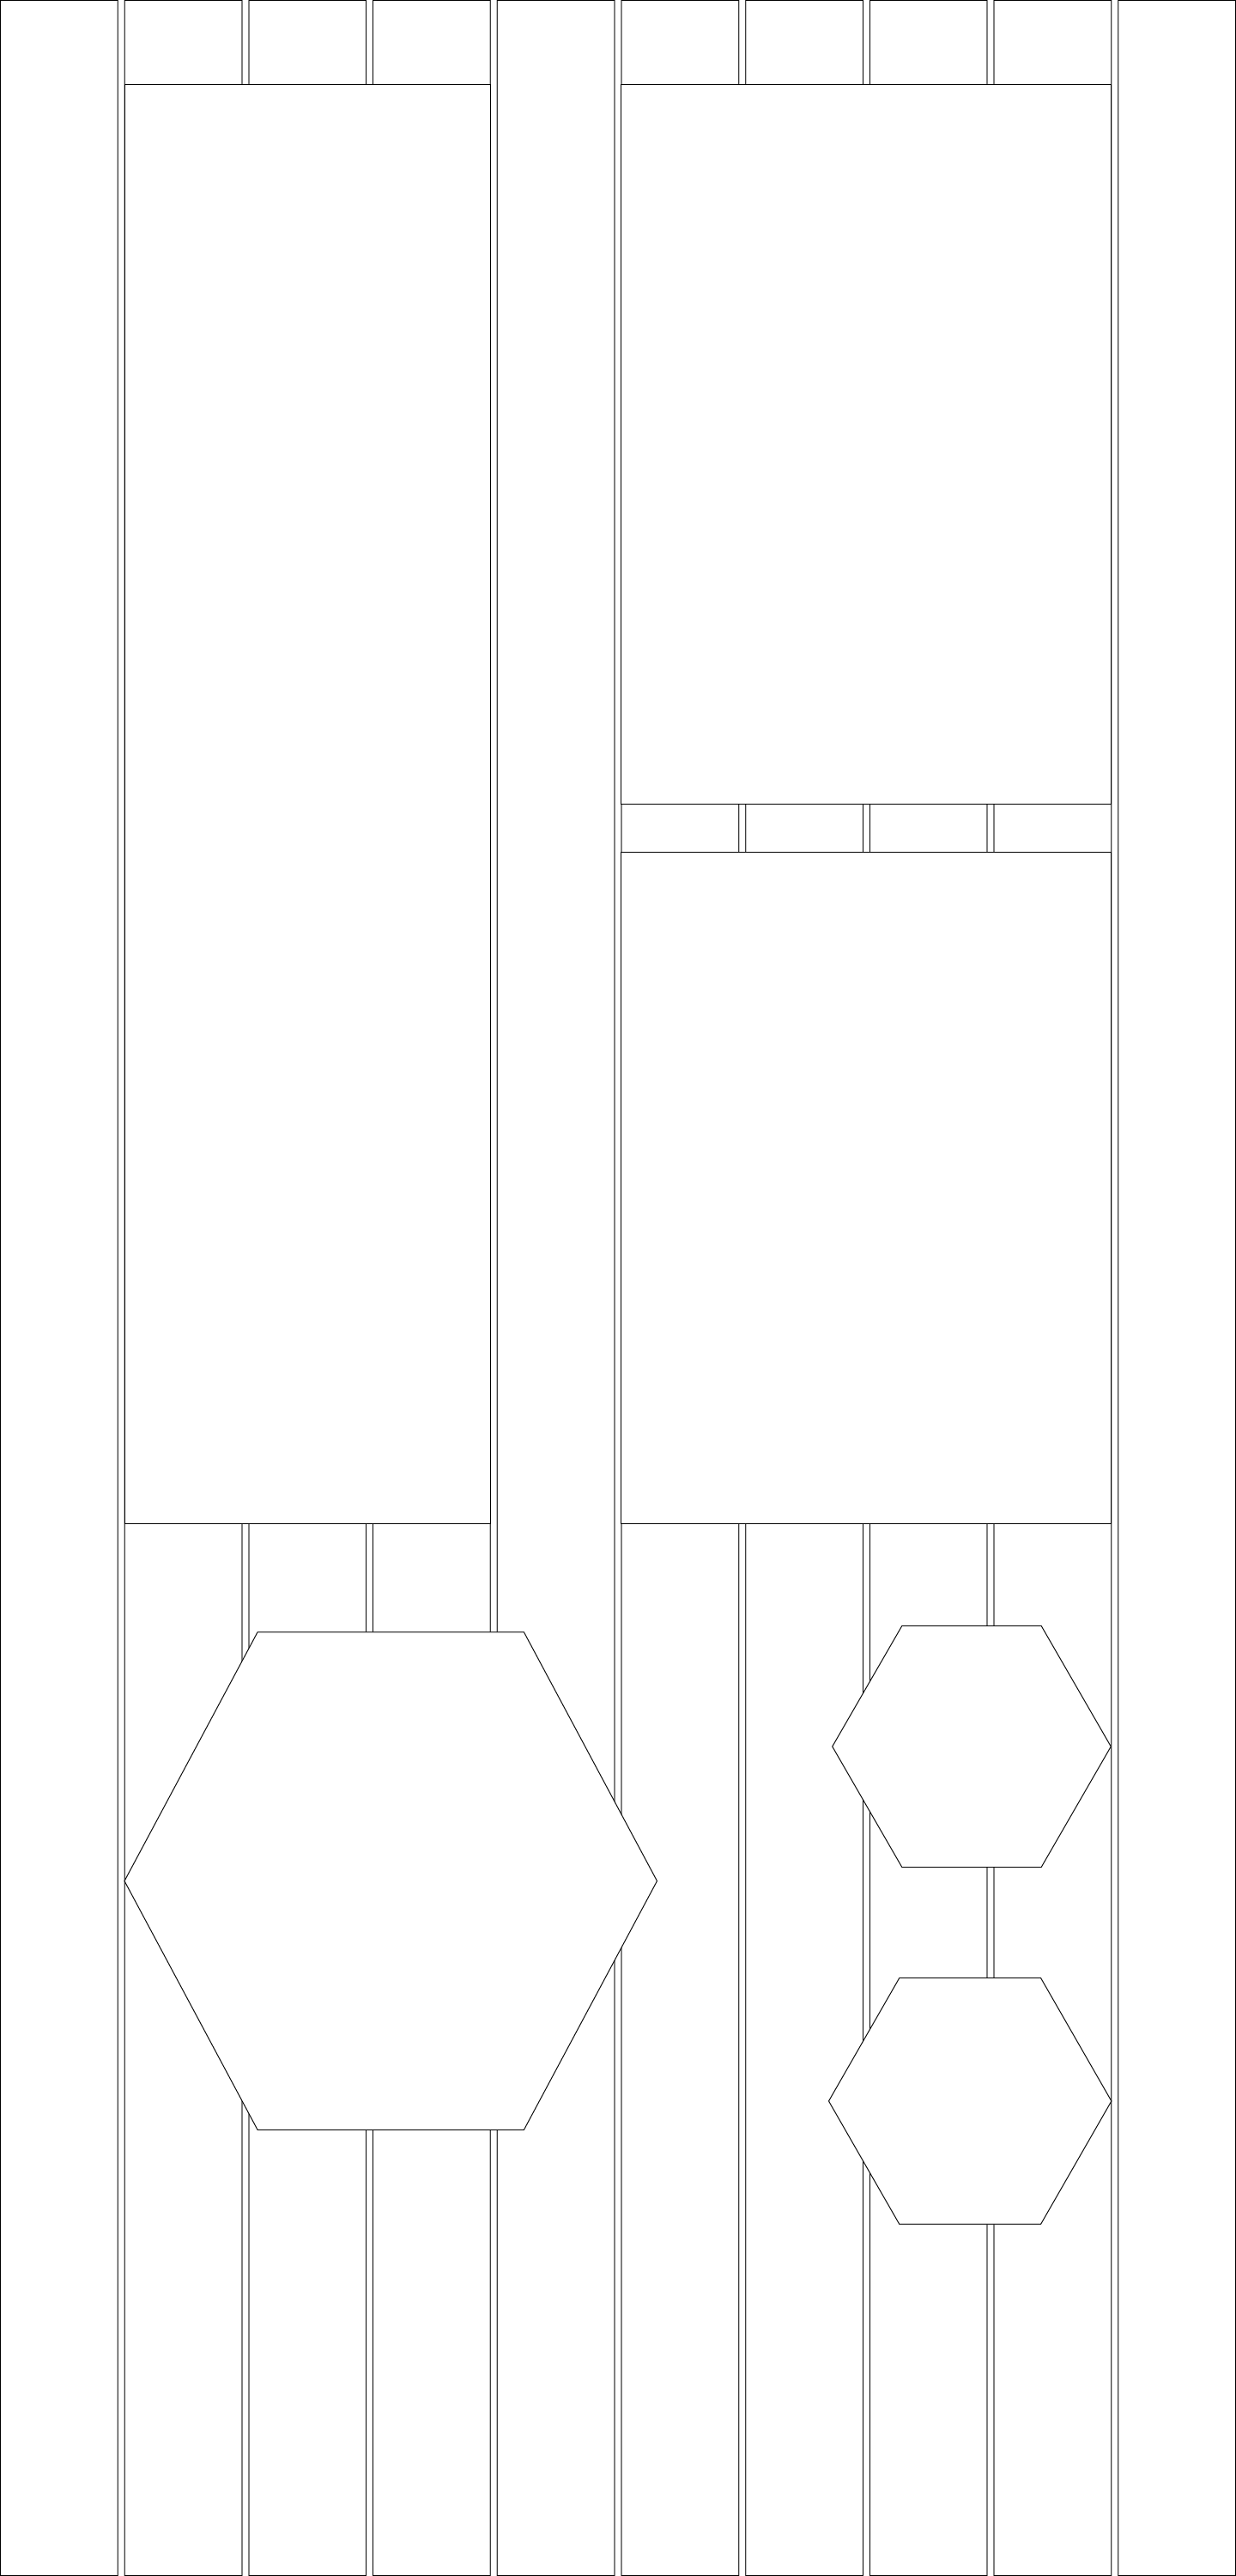 shape layout p2